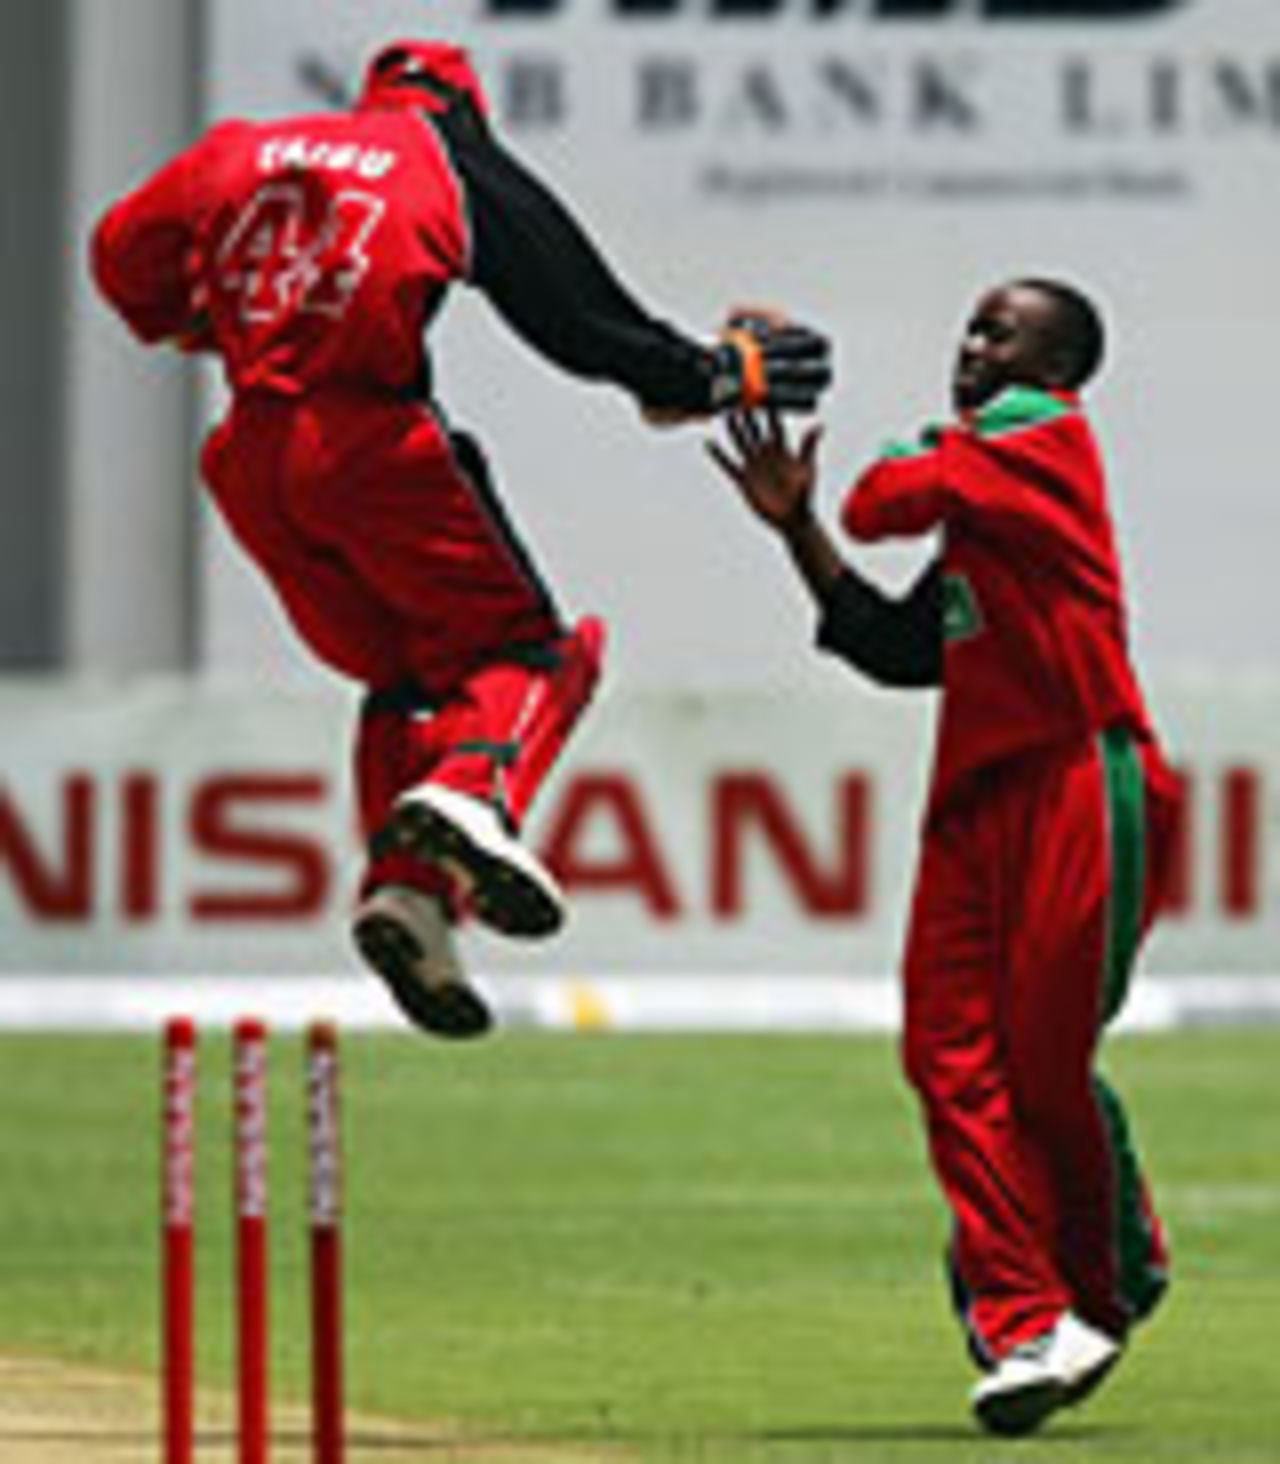 Tatenda Taibu and Prosper Utseya celebrate the dismissal of Vikram Solanki, 2nd ODI, Zimbabwe v England, Harare,  December 1 2004